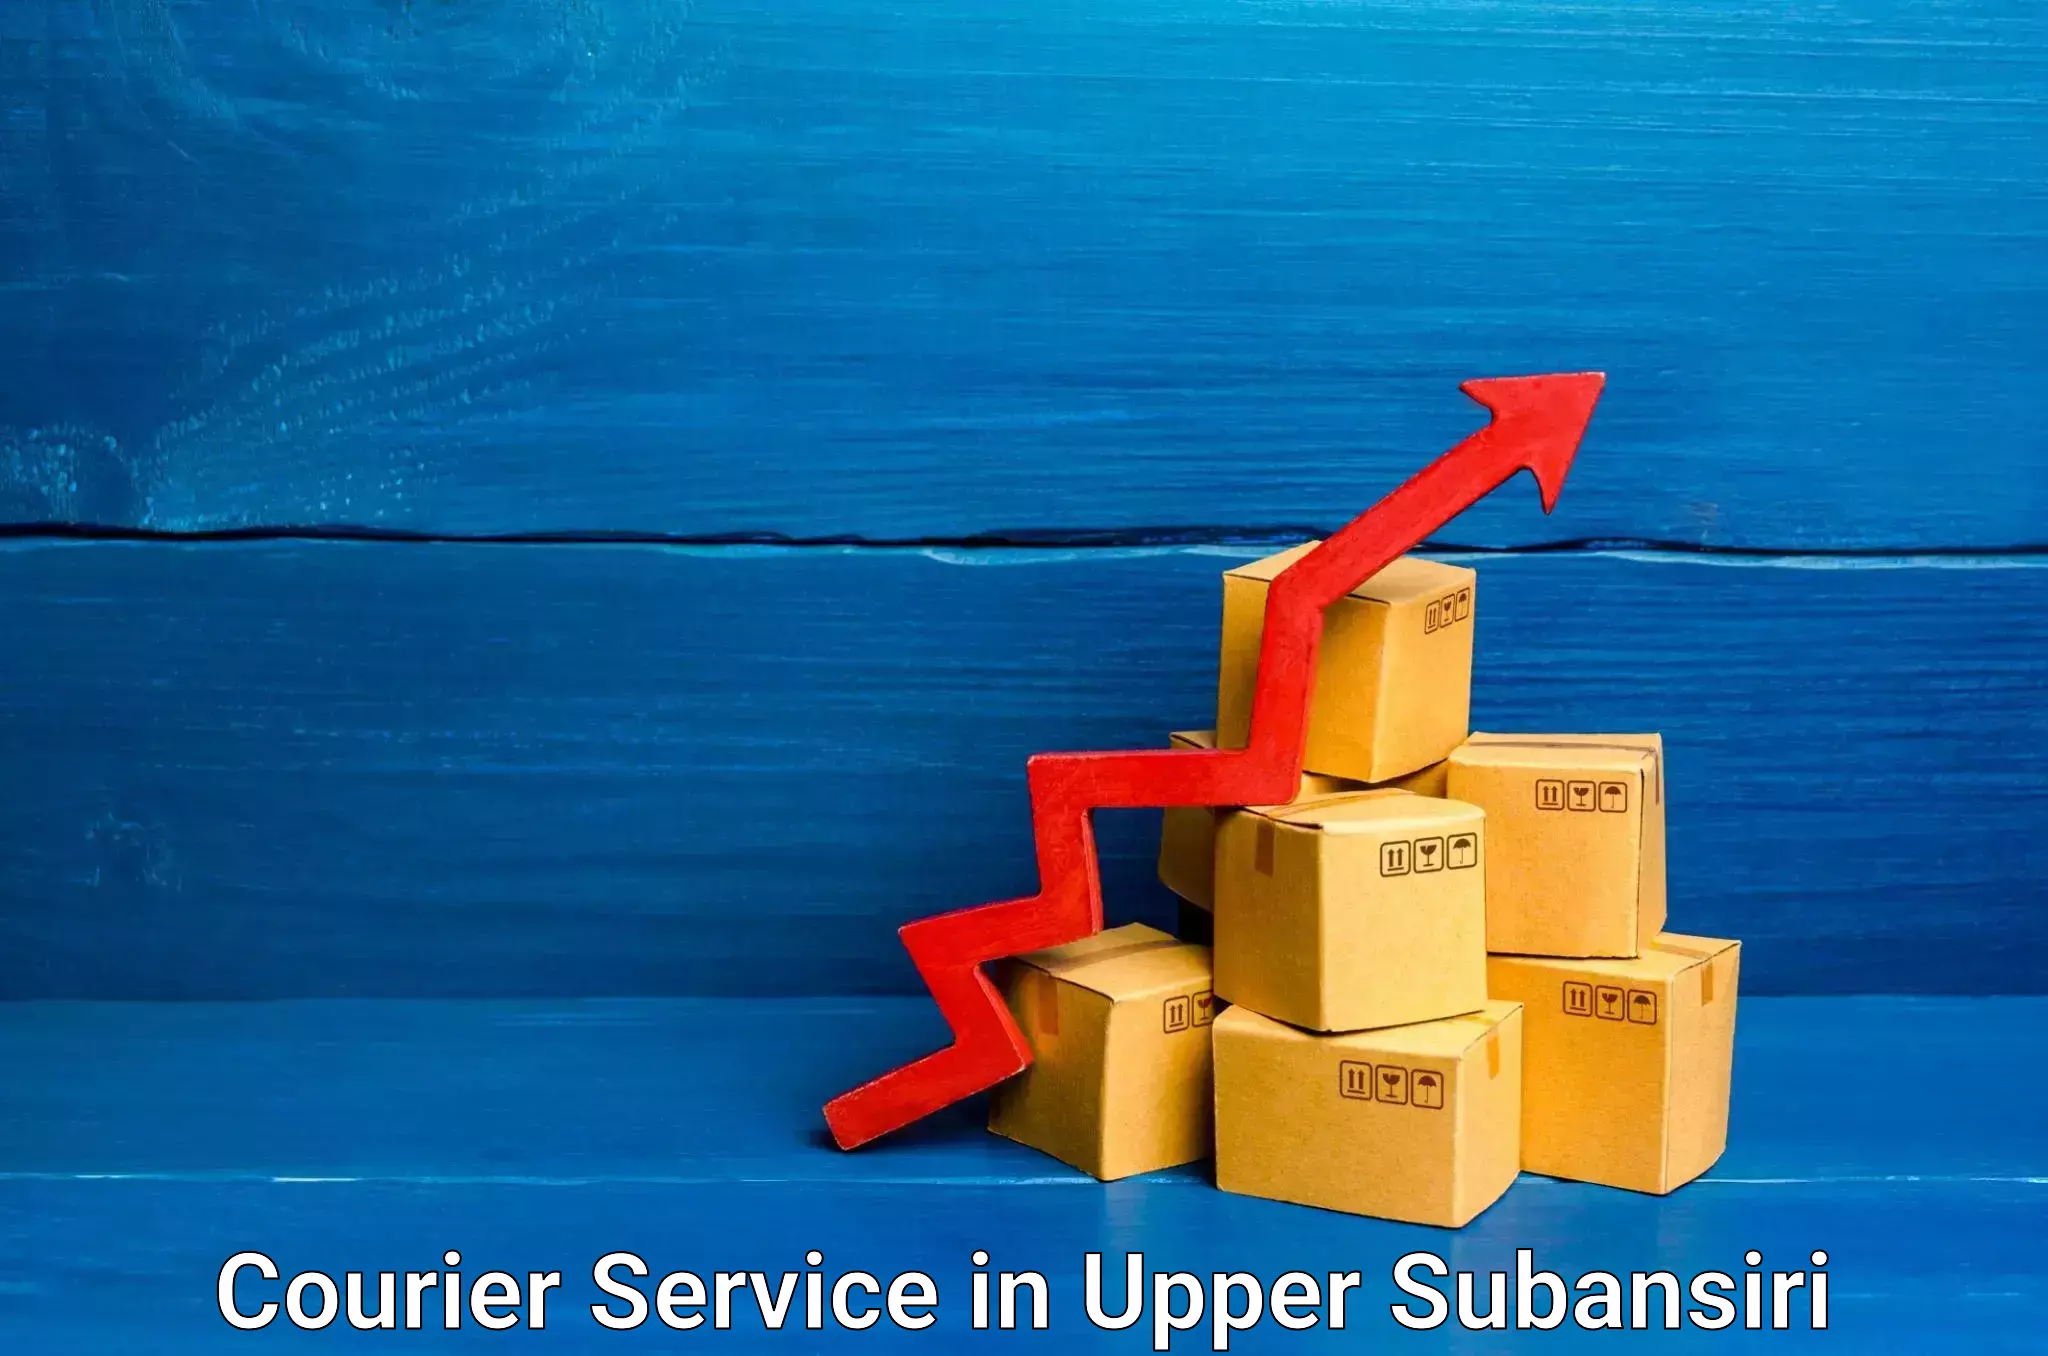 Supply chain efficiency in Upper Subansiri